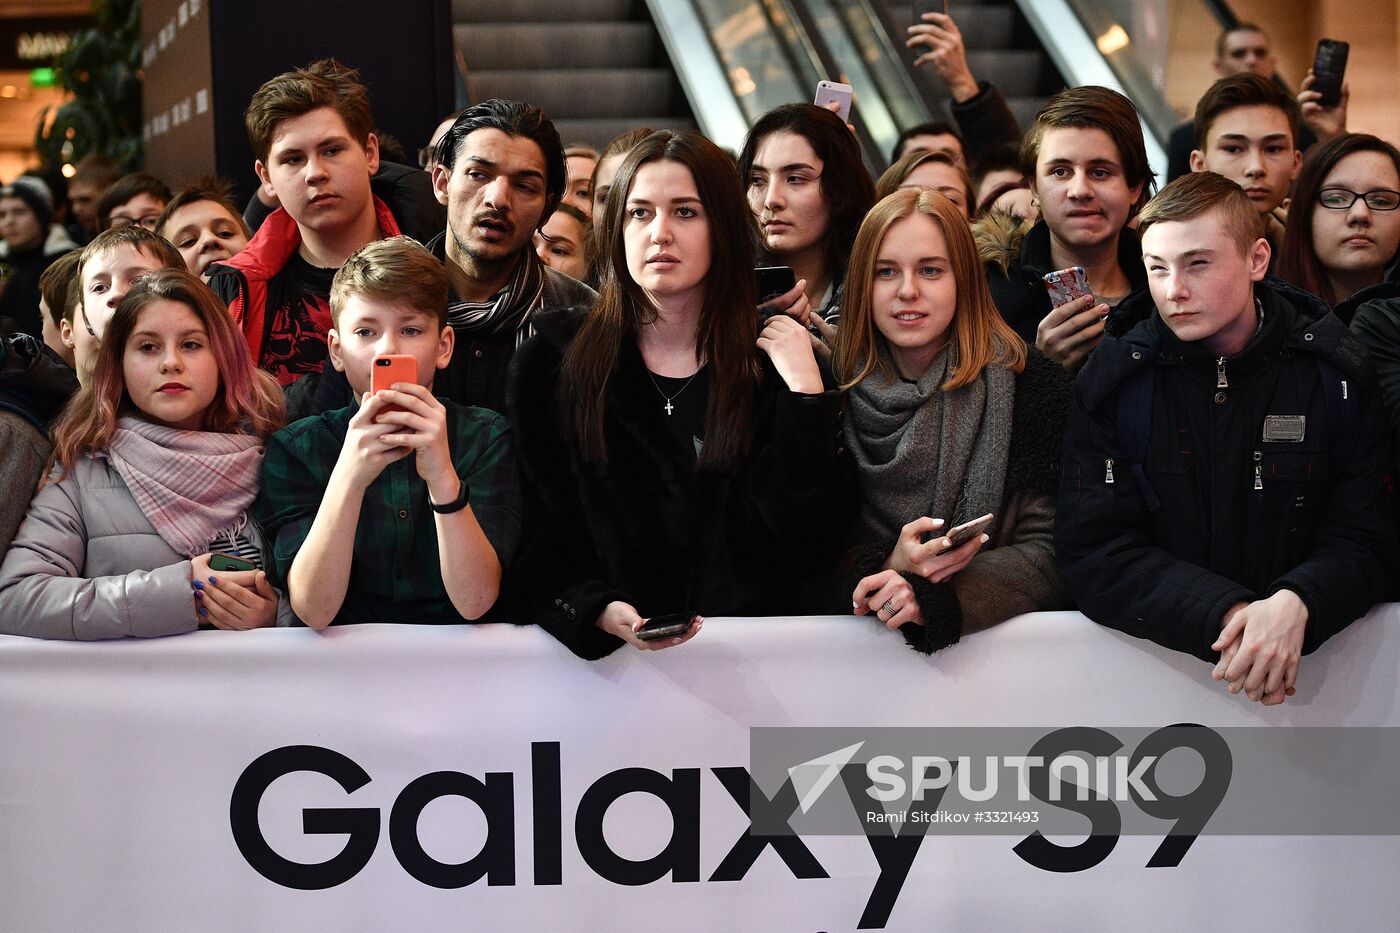 Samsung Galaxy S9 и S9+ sales launch